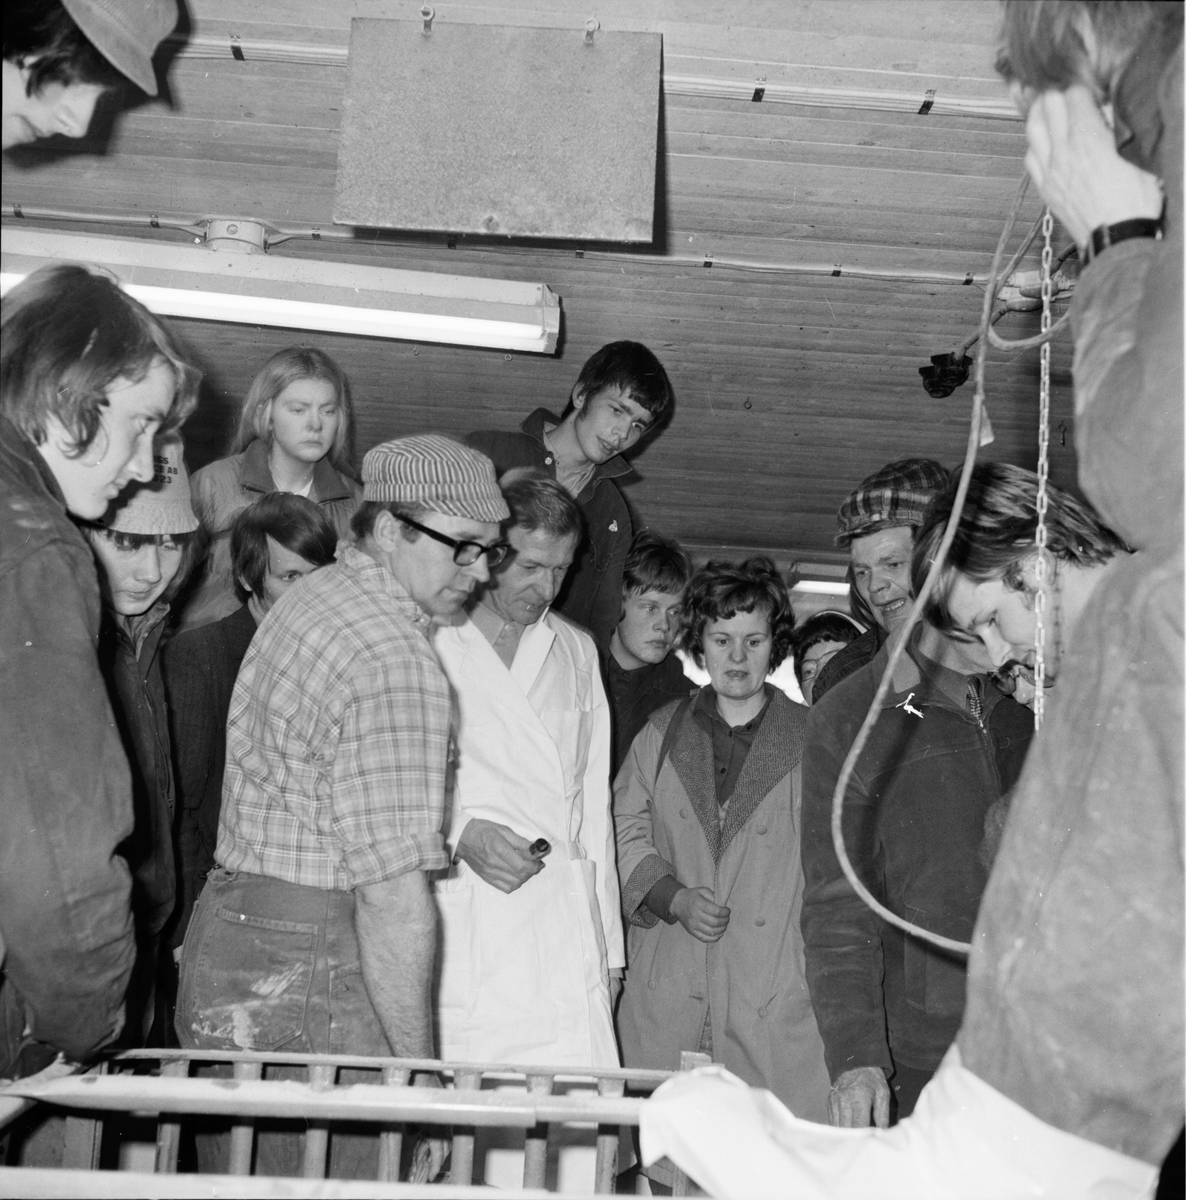 Nytorp,
Svinhälsodag,
April 1972